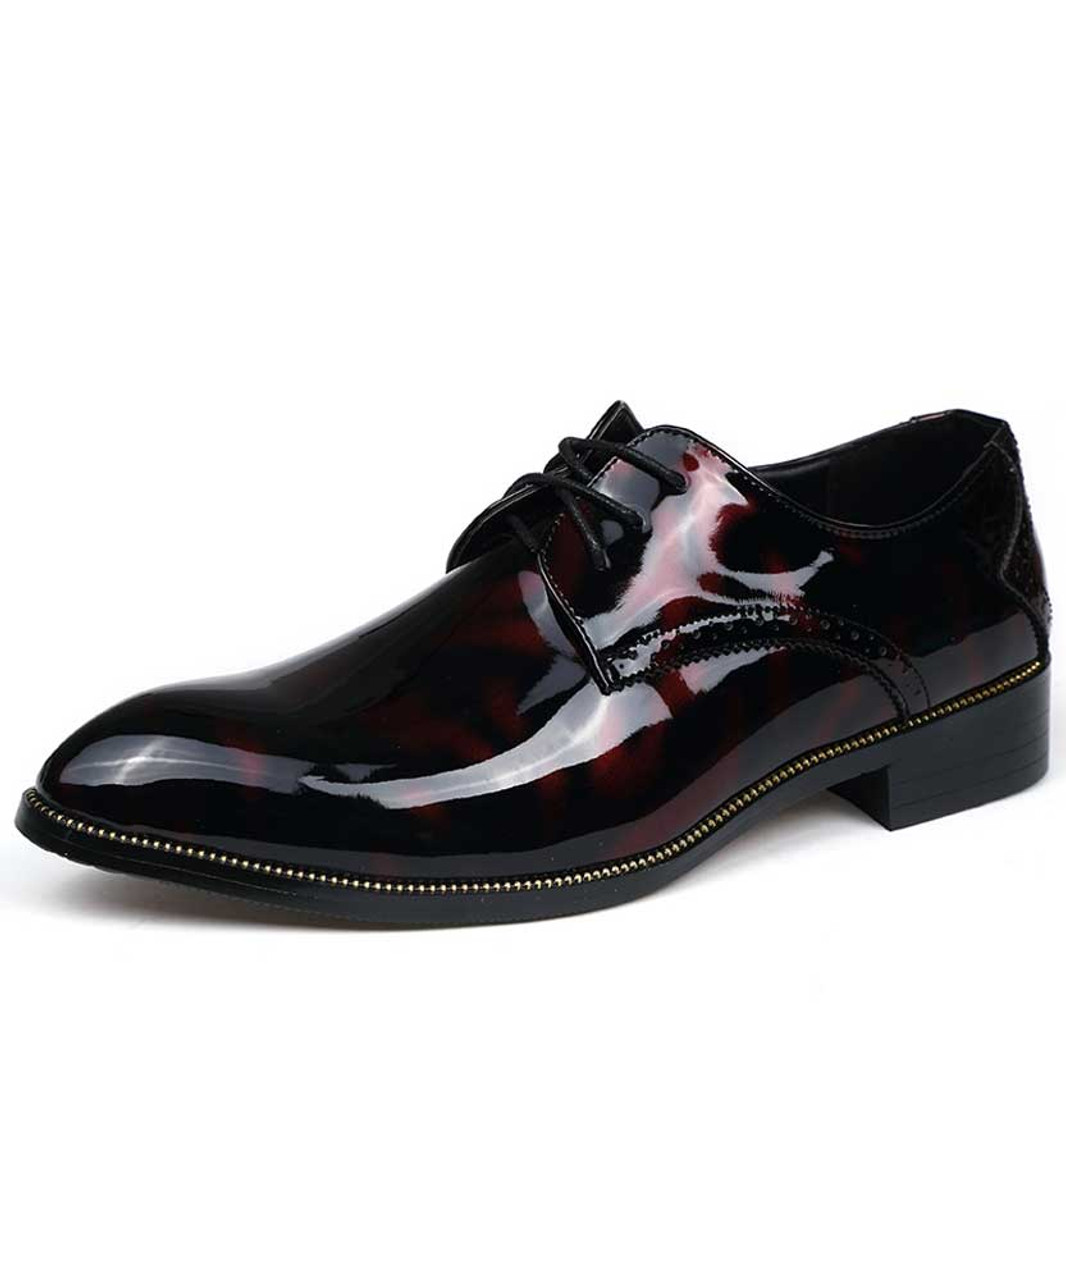 Claret red brogue patent leather derby dress shoe | Mens dress shoes ...